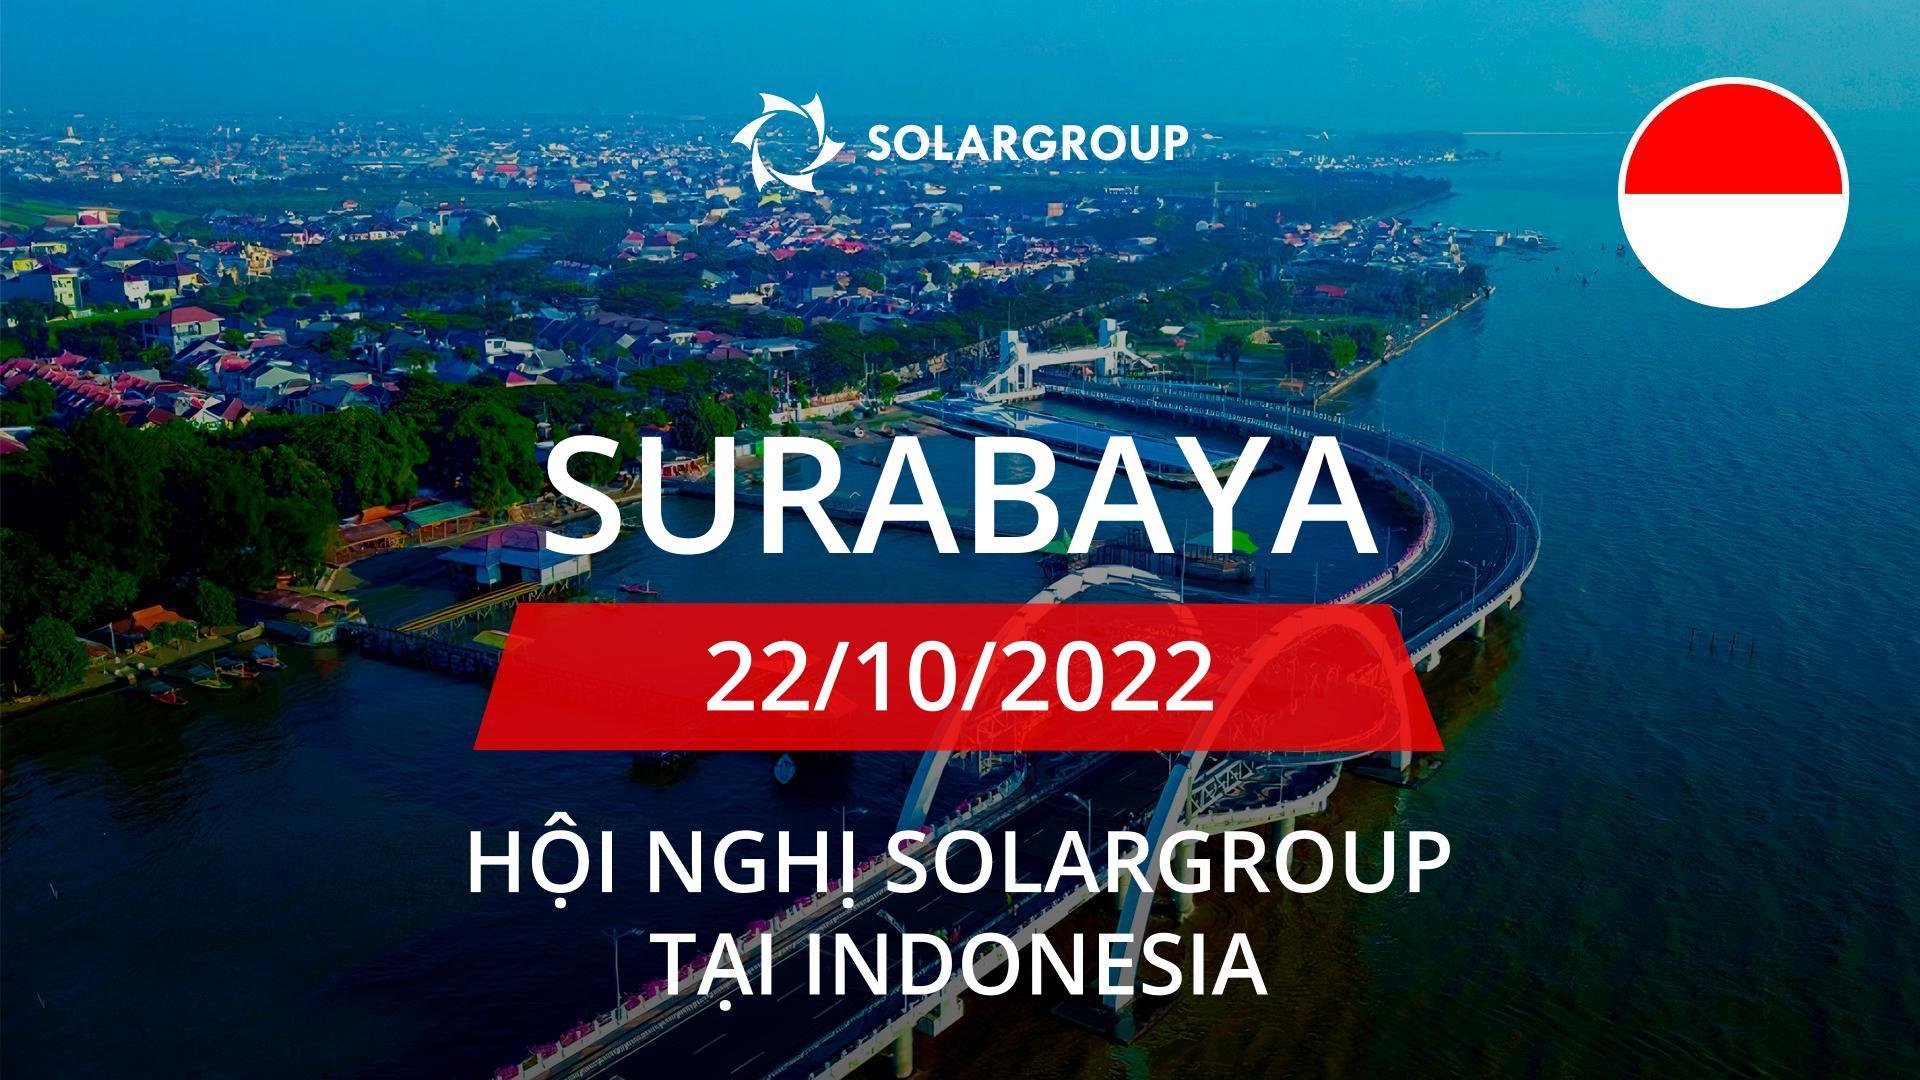 Hội nghị SOLARGROUP tại Indonesia: Ngày 22/10, Surabaya